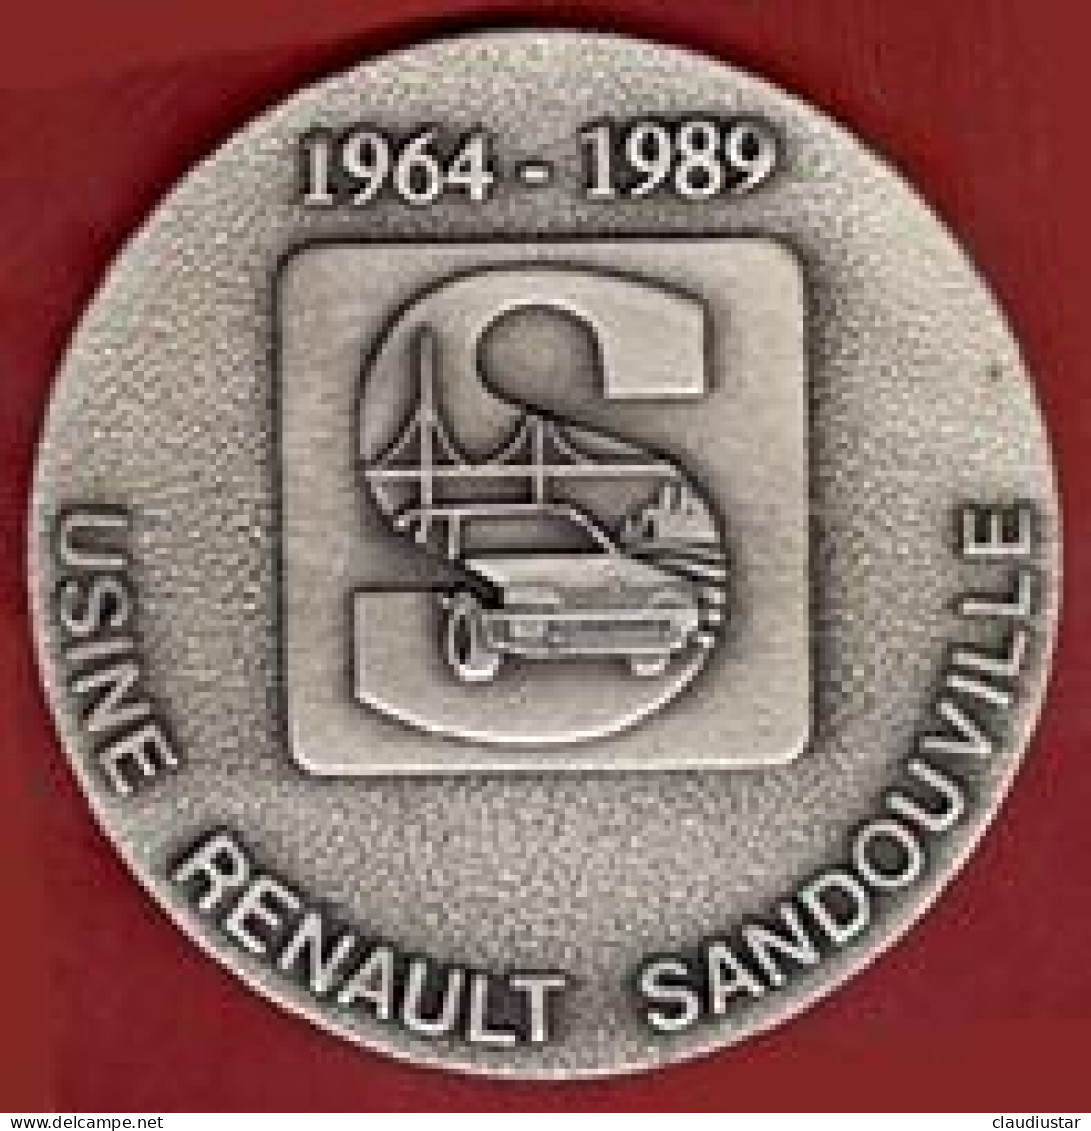 ** MEDAILLE  USINE  RENAULT  SANDOUVILLE  1964 - 1989 ** - Autosport - F1